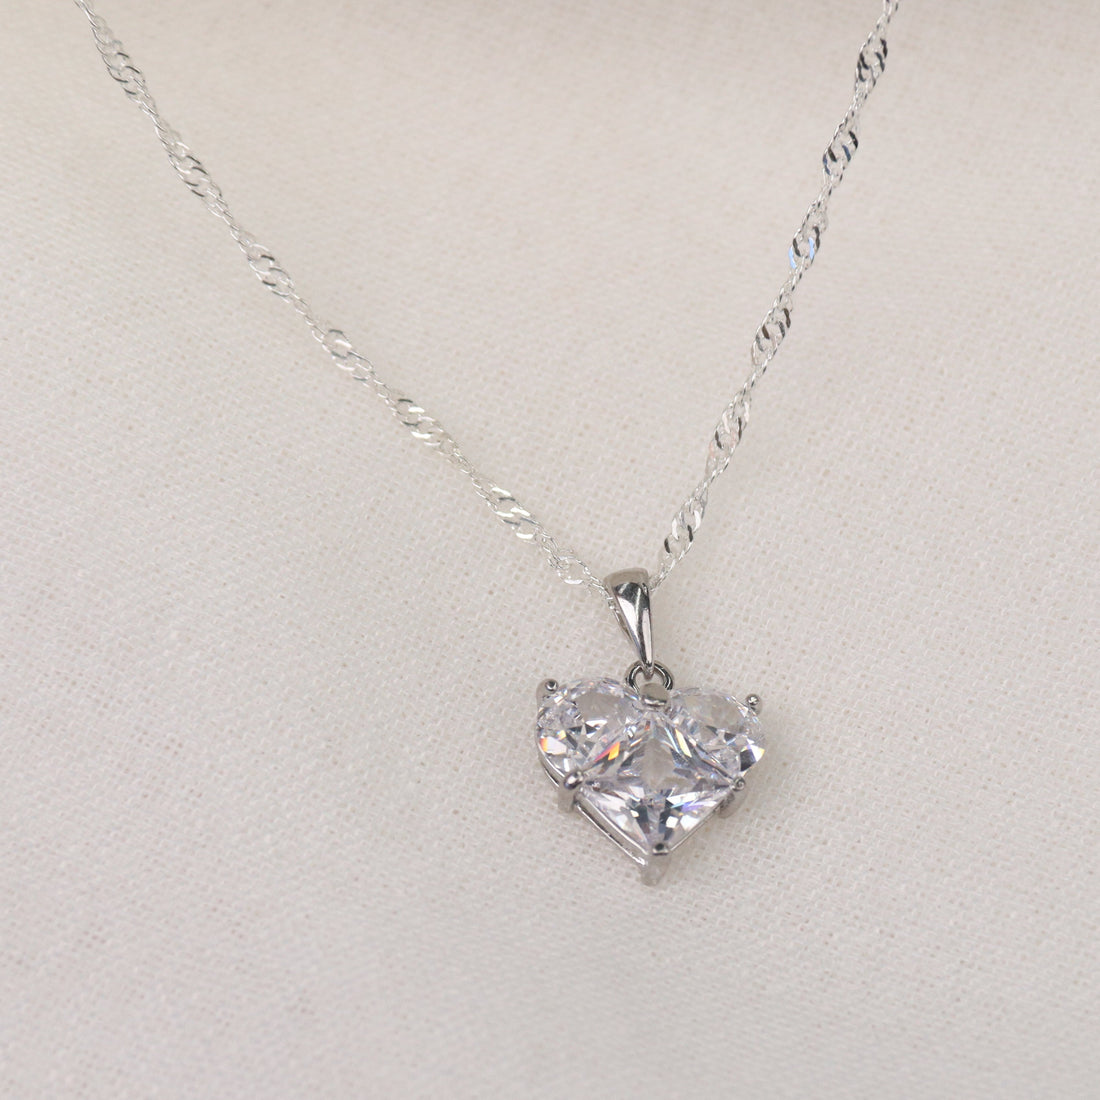 Juliet | Gold & Cubic Zirconia Heart Necklace